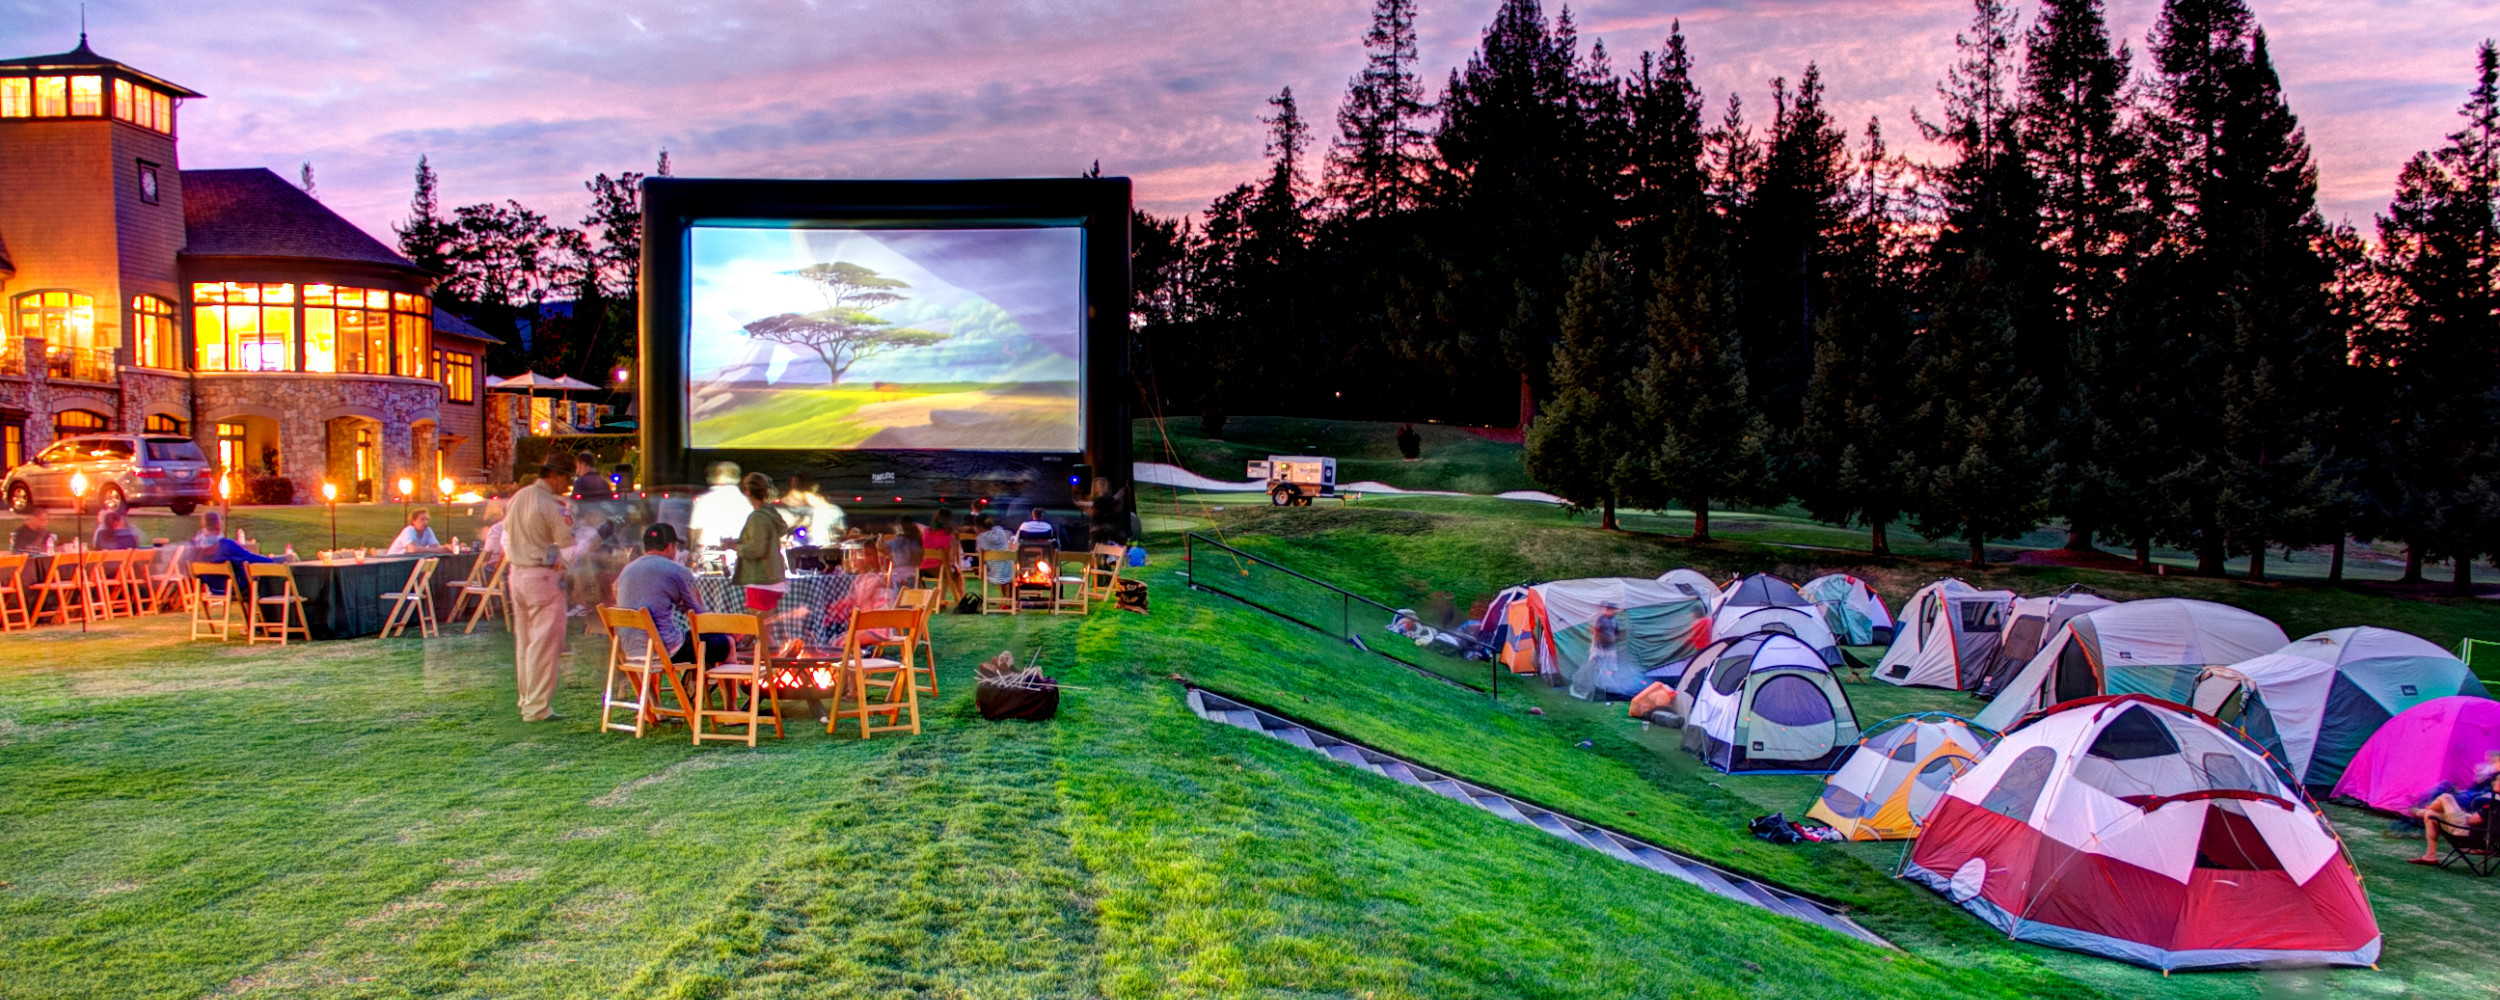 Washington-outdoor-movie-party